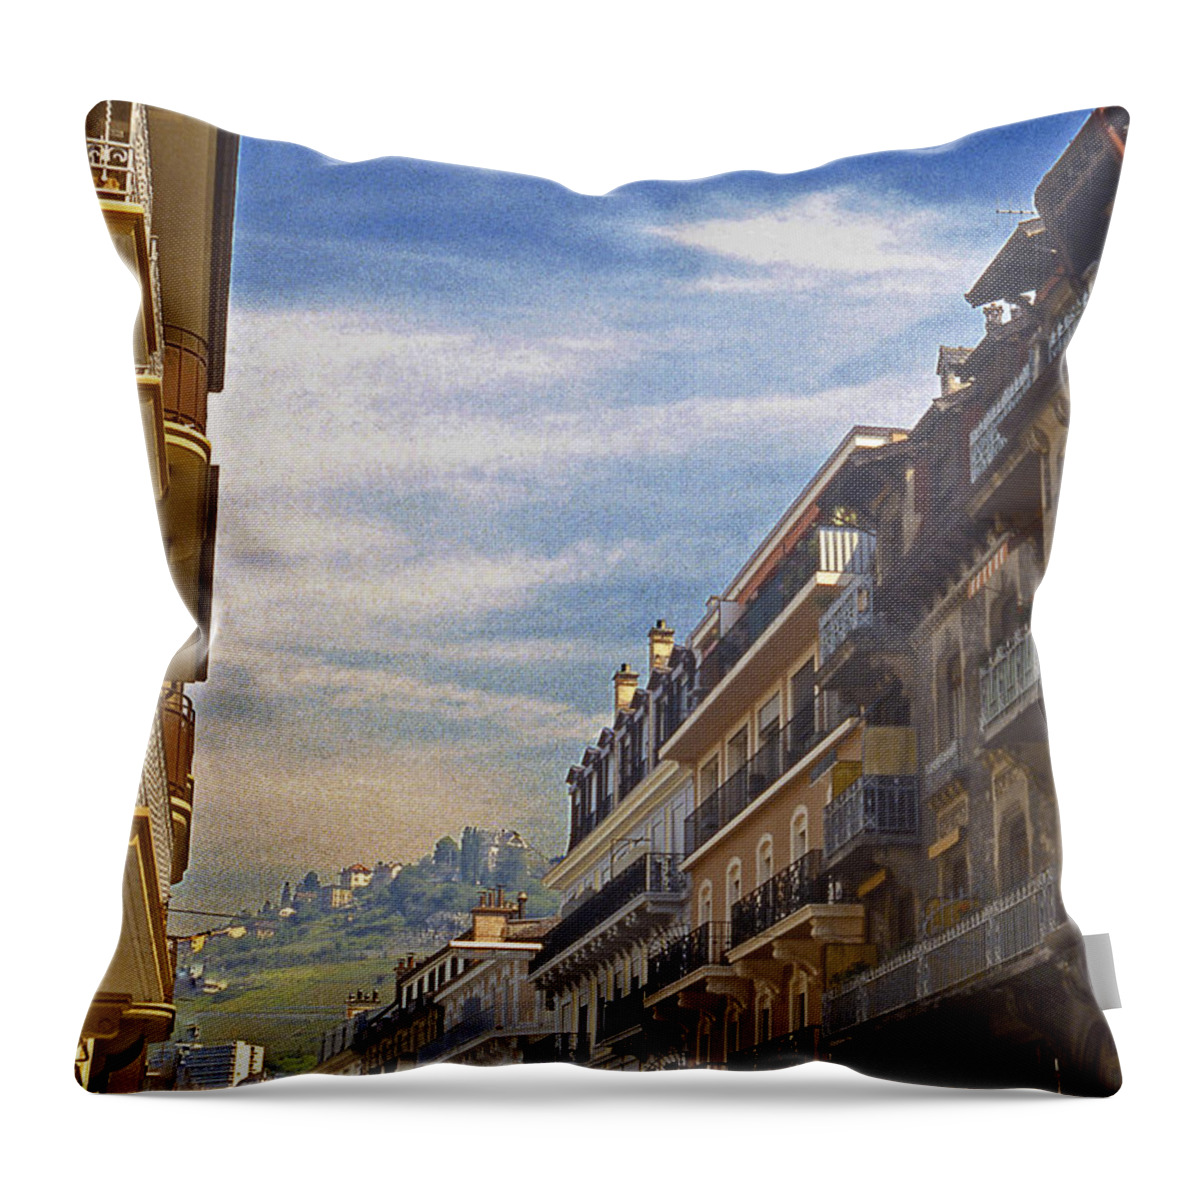 Switzerland Throw Pillow featuring the photograph Montreaux Street Scene by Stuart Litoff